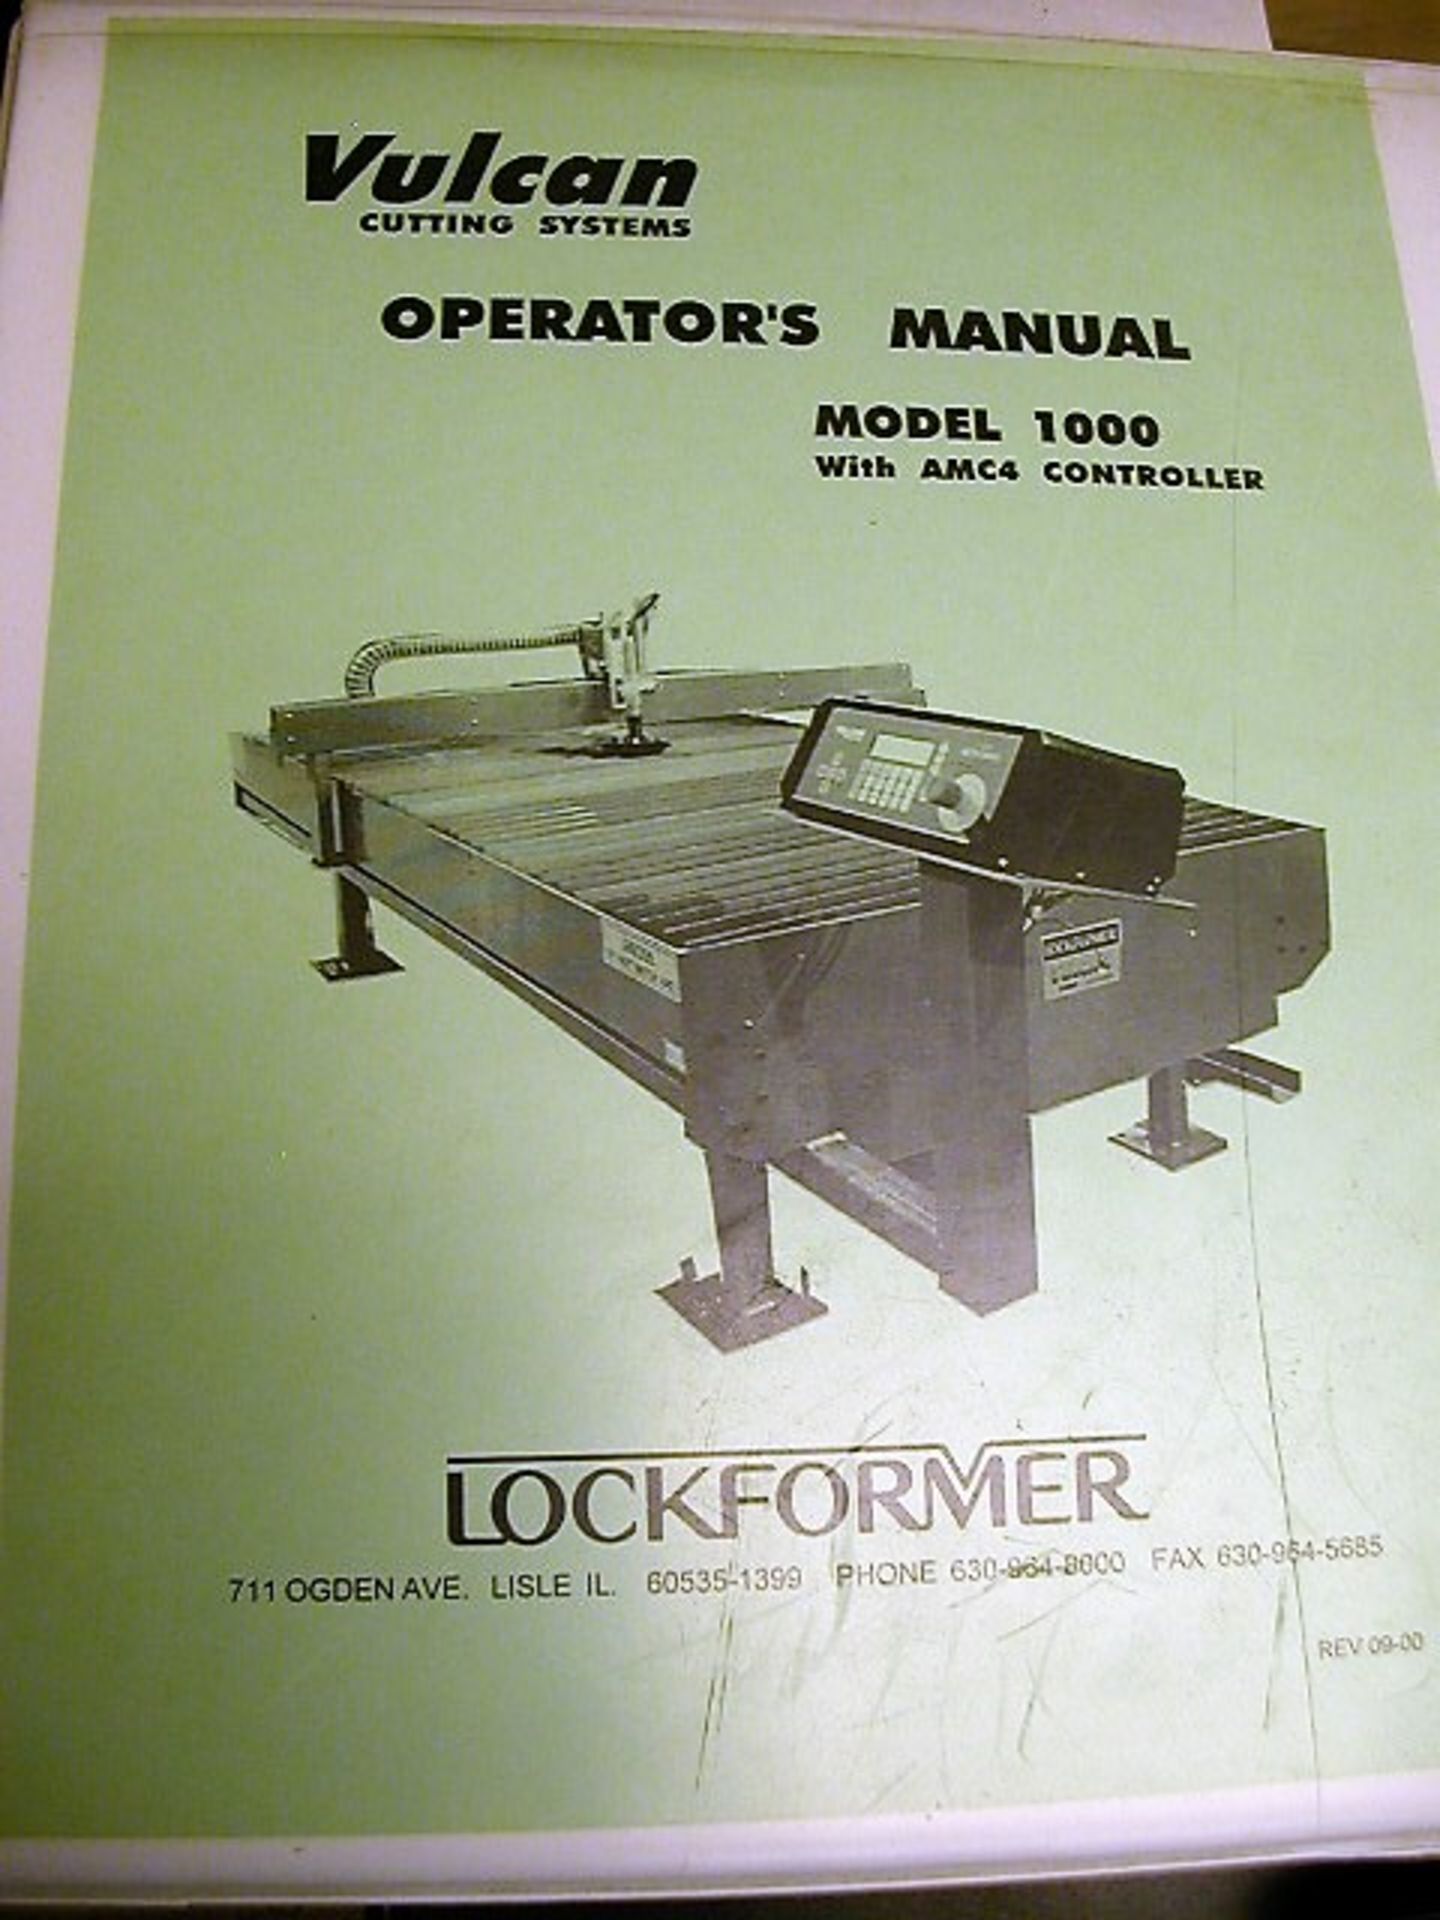 Lockformer Vulcan 1000 Cutting Systems with AMC4 Controller. Computerized 10'x5' Sheet Metal Table - Bild 4 aus 14